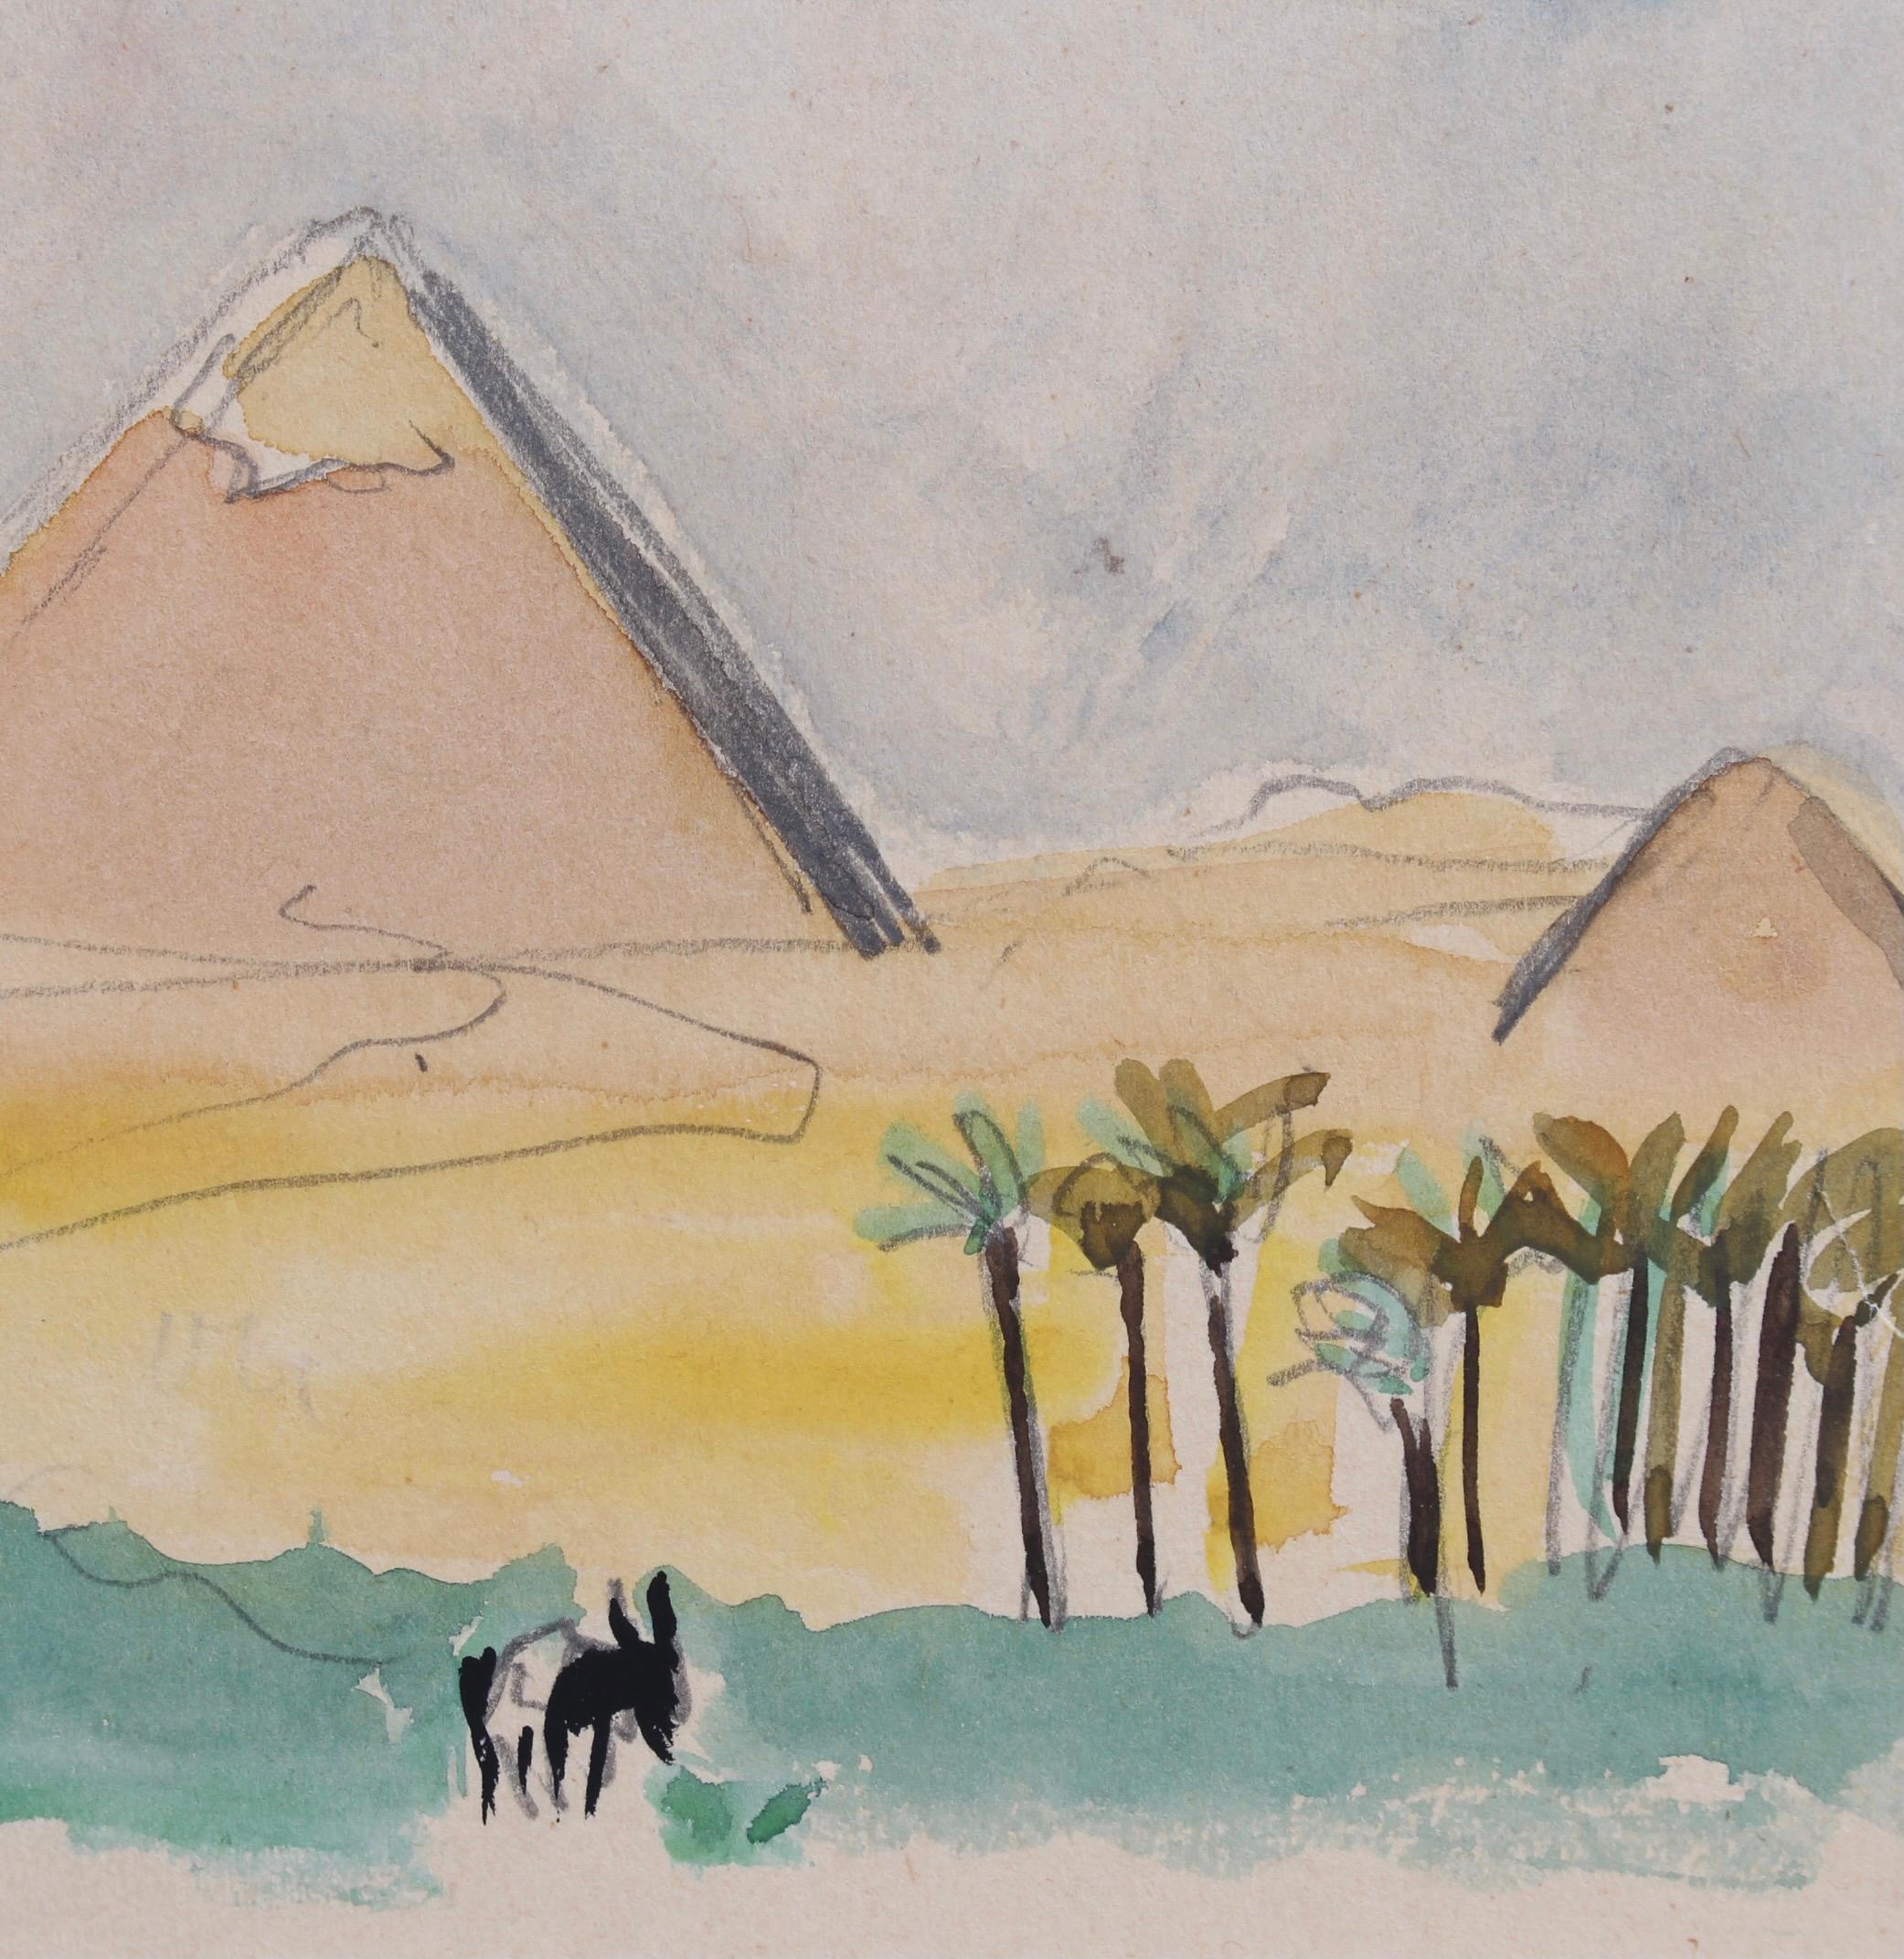 The Pyramids of Giza 5